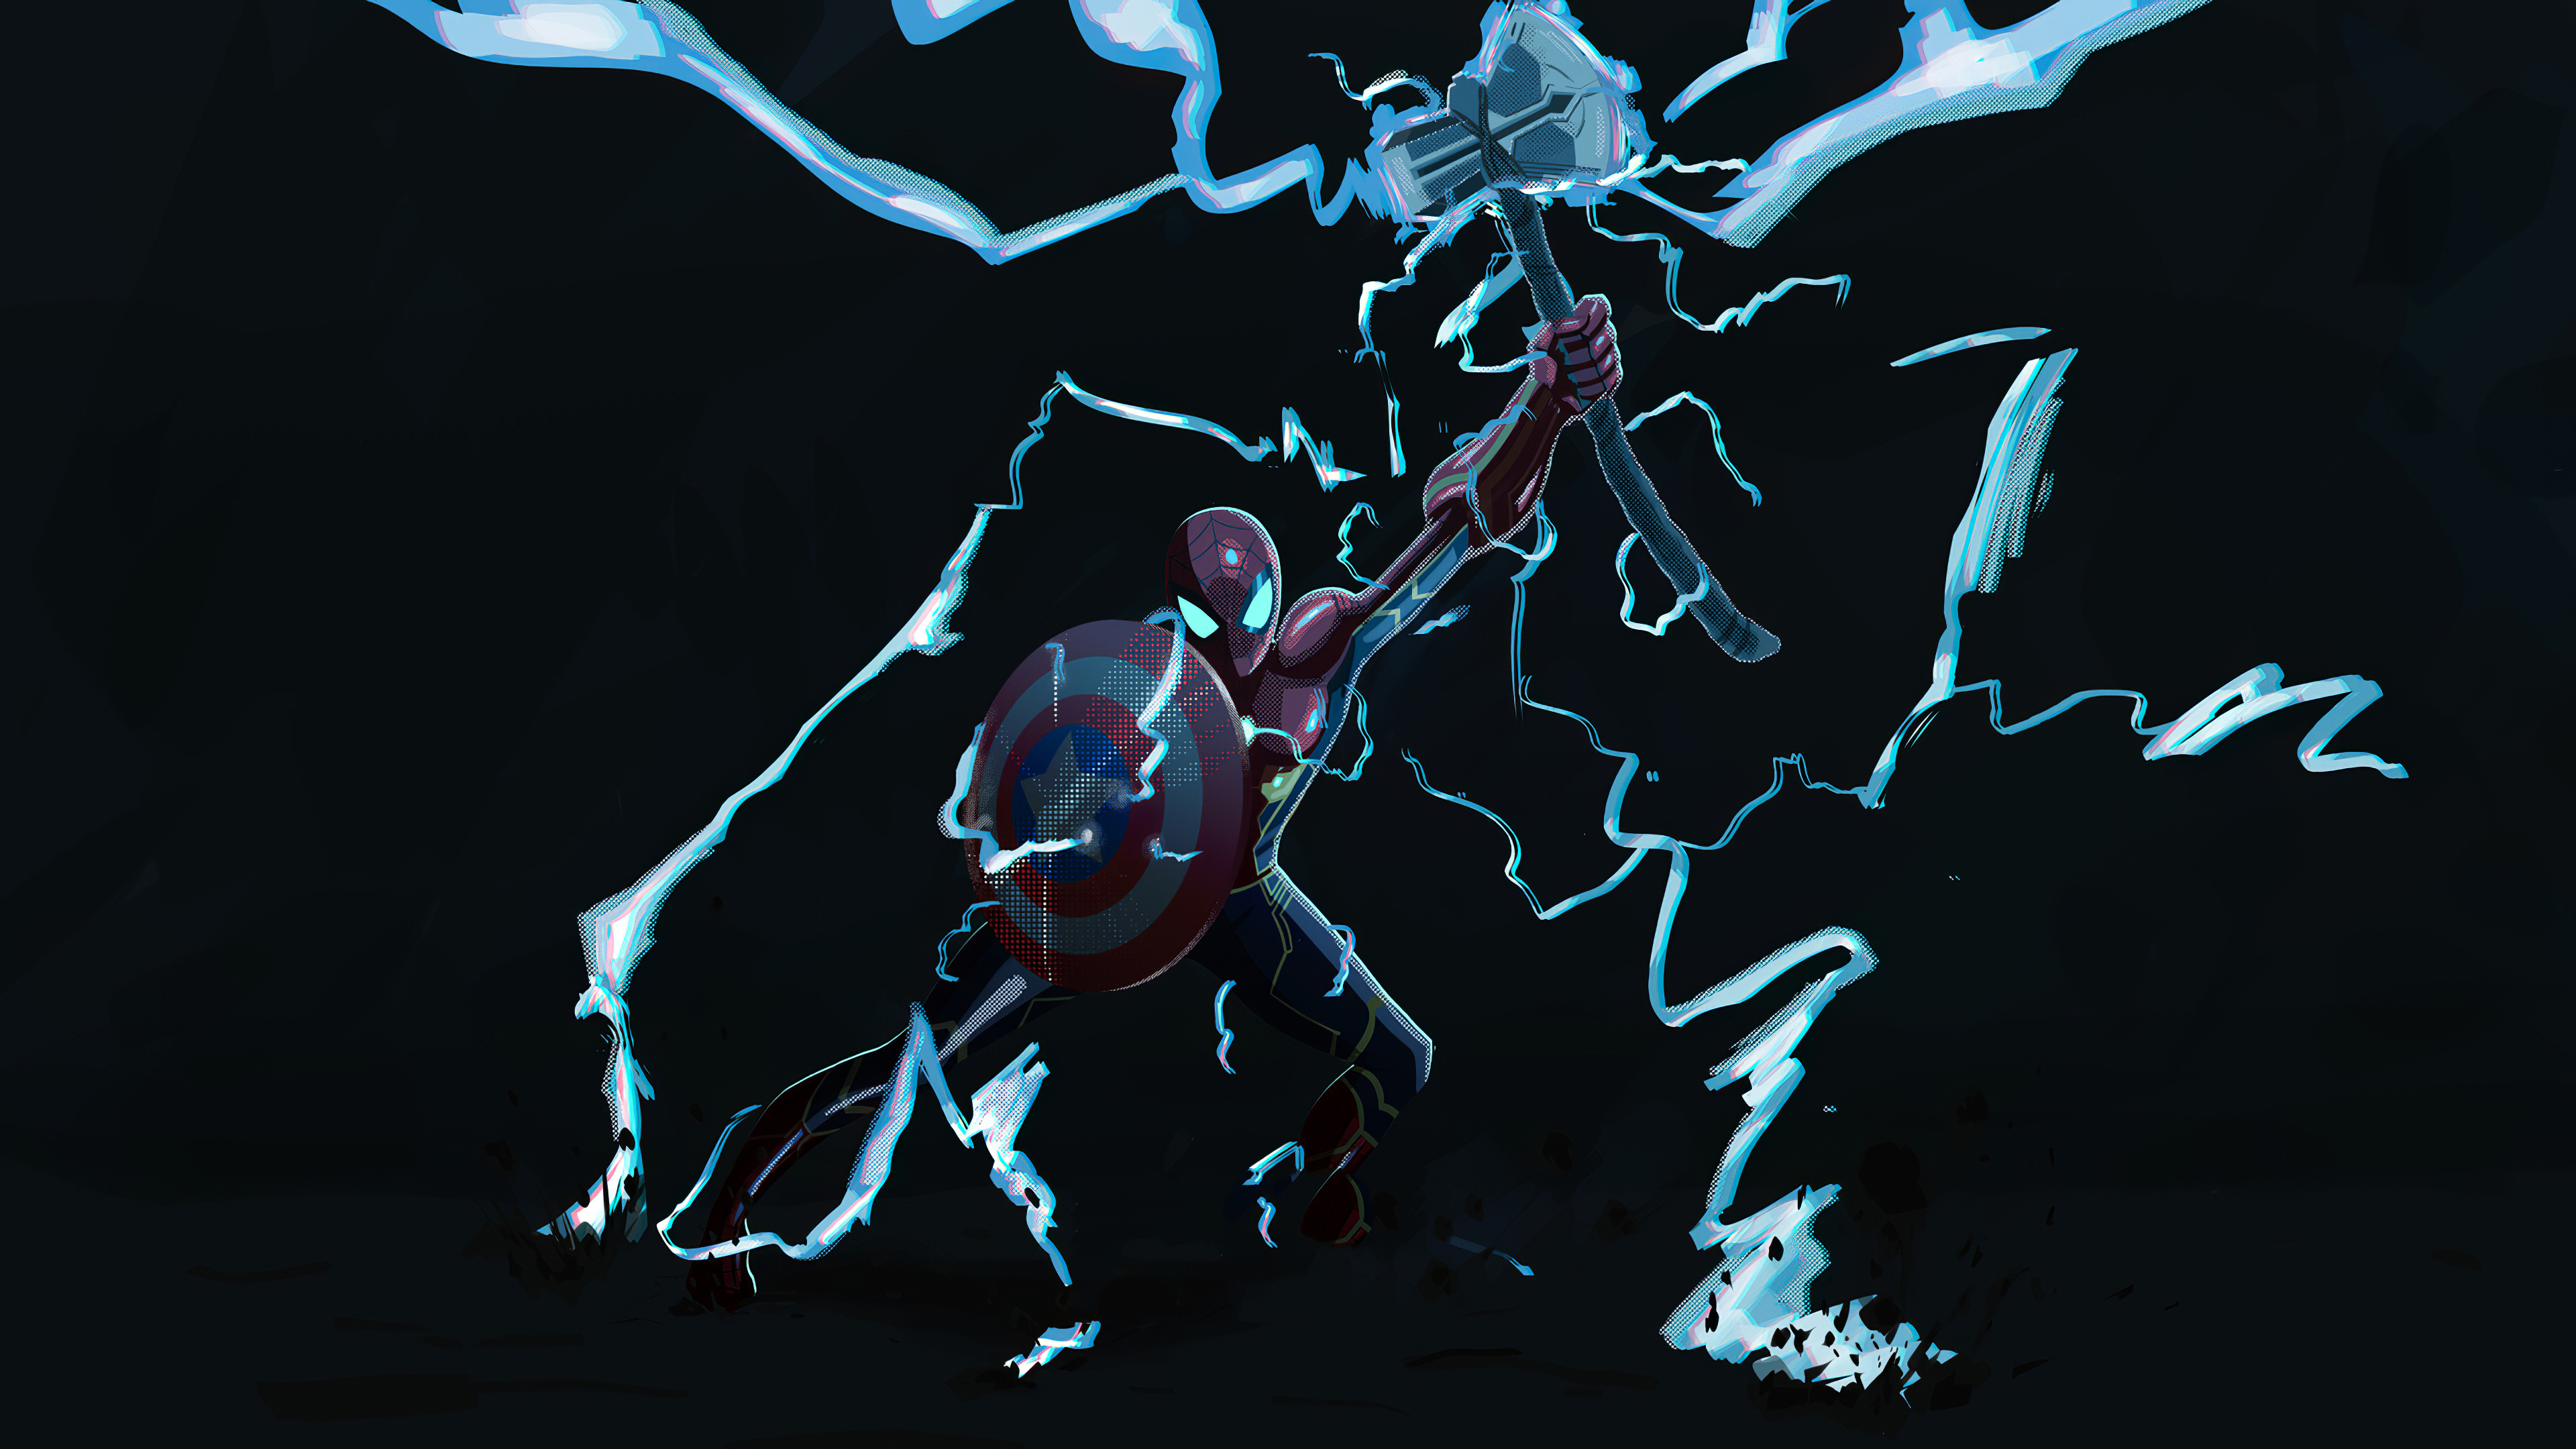 Endgame Captain America Thor Hammer Lightning 4k C iPhone Wallpapers  Free Download